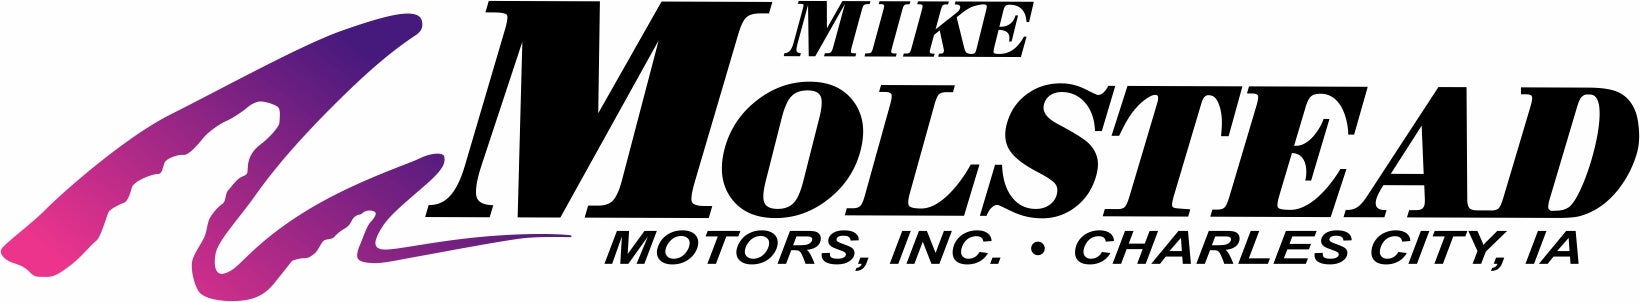 Mike Molstead Motors GM Charles City, IA